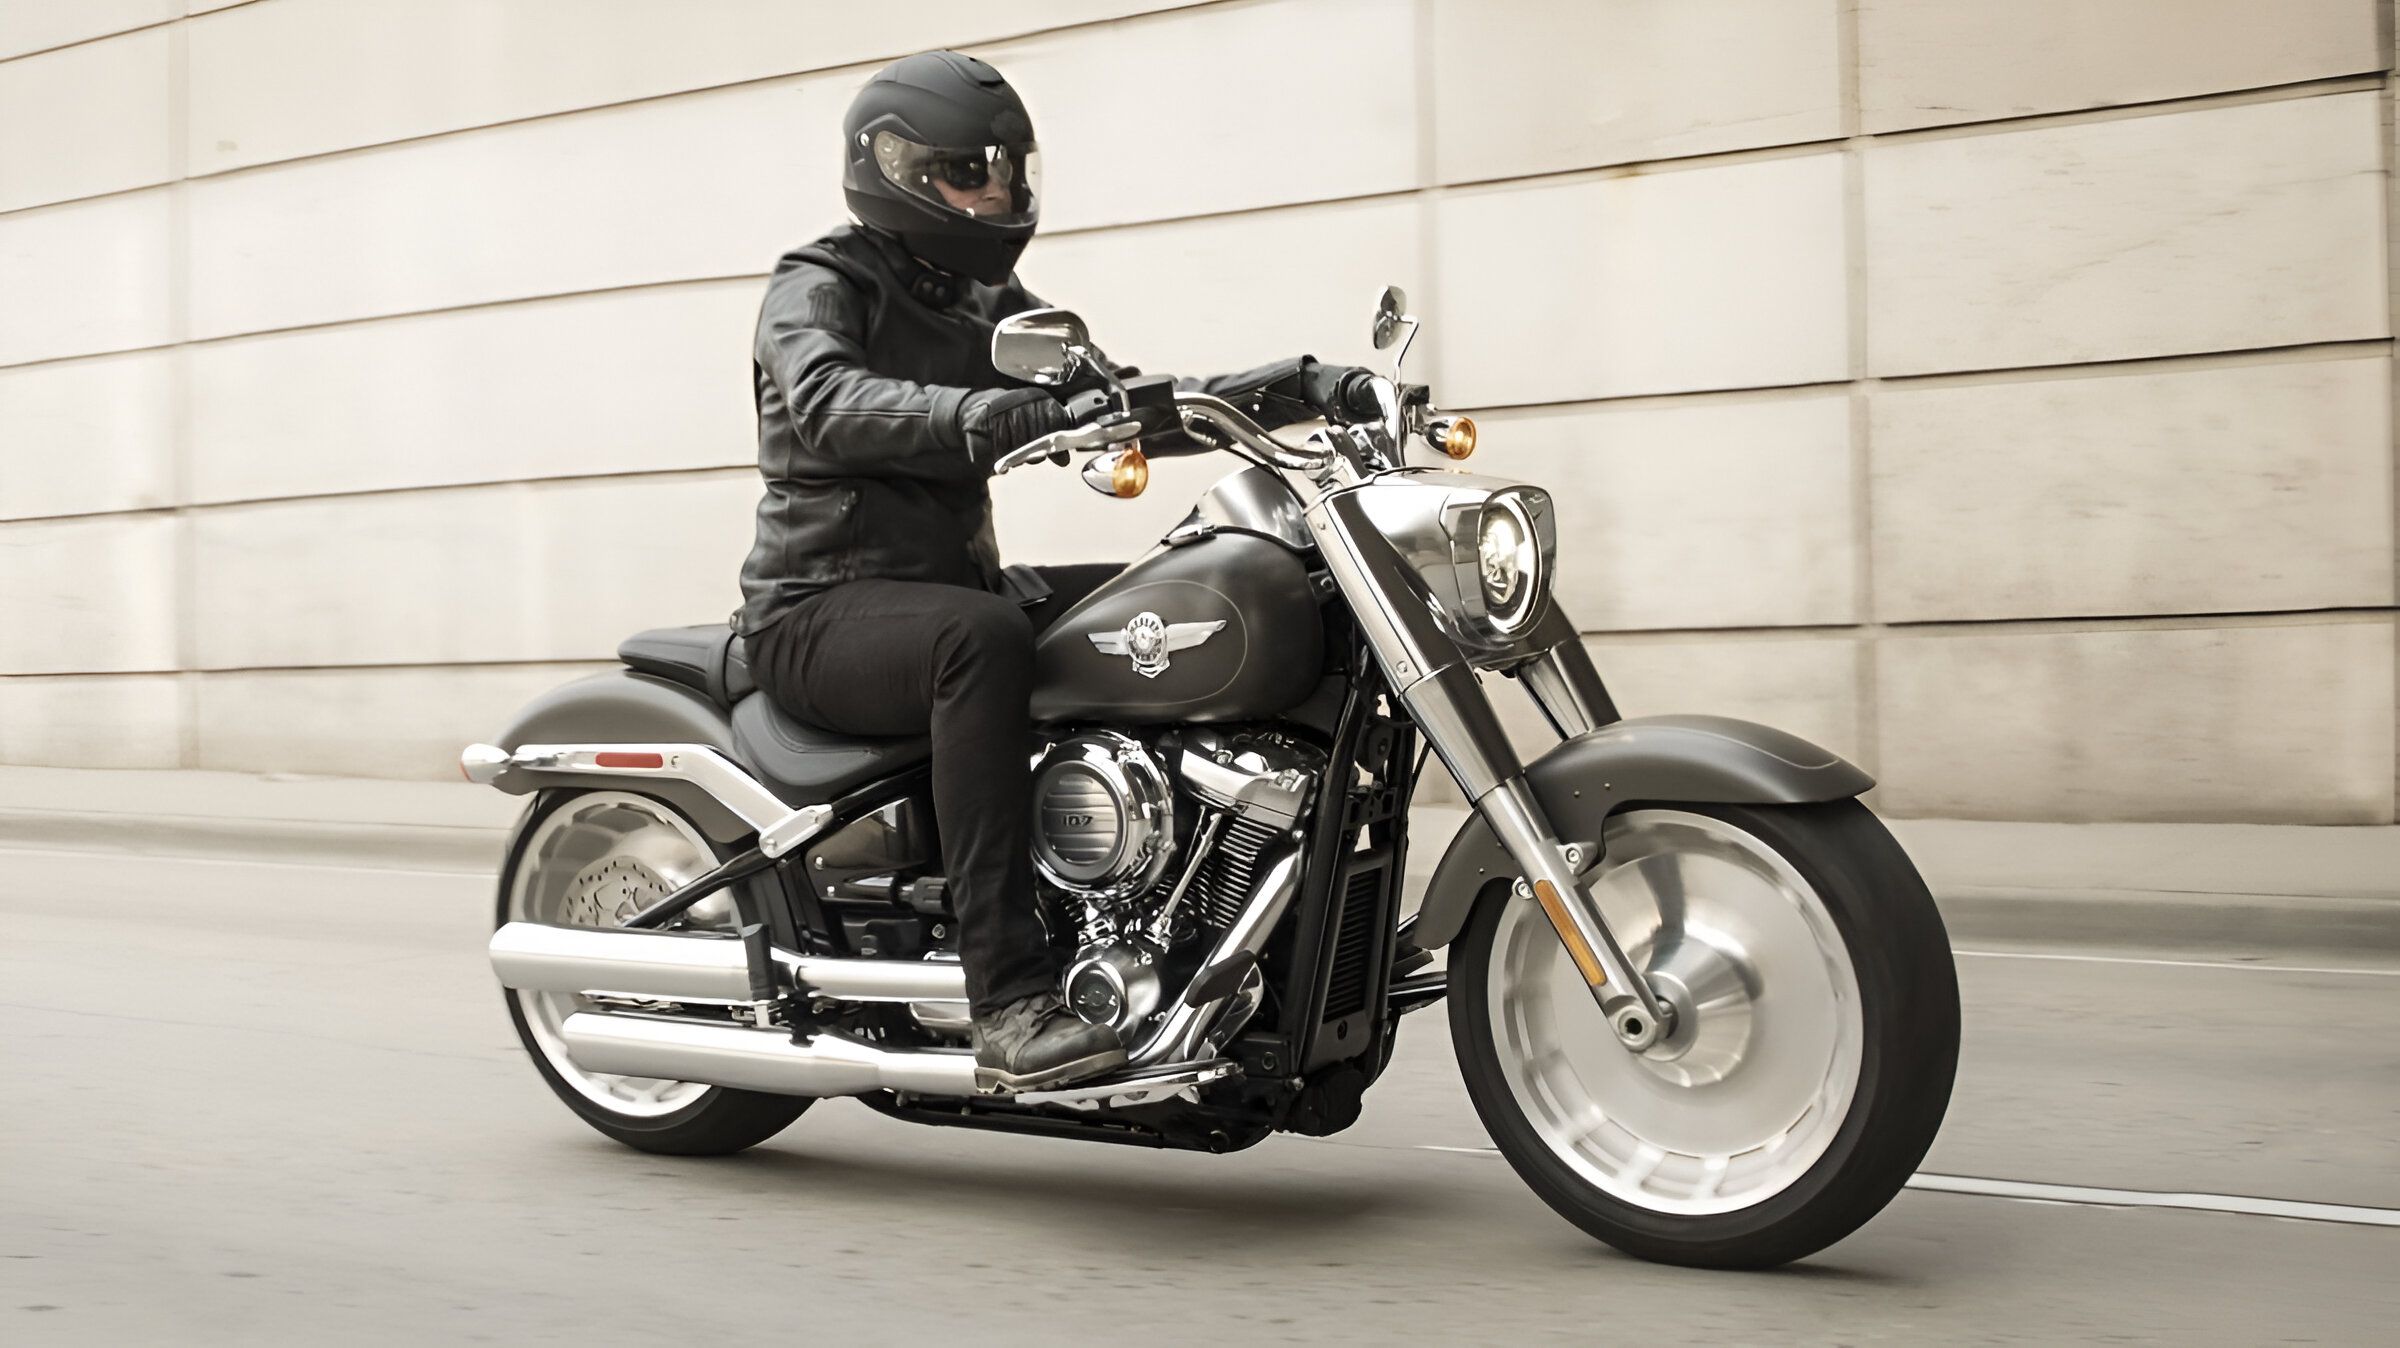 2019 Harley-Davidson Fat Boy 114 accelerating front third qaurter view